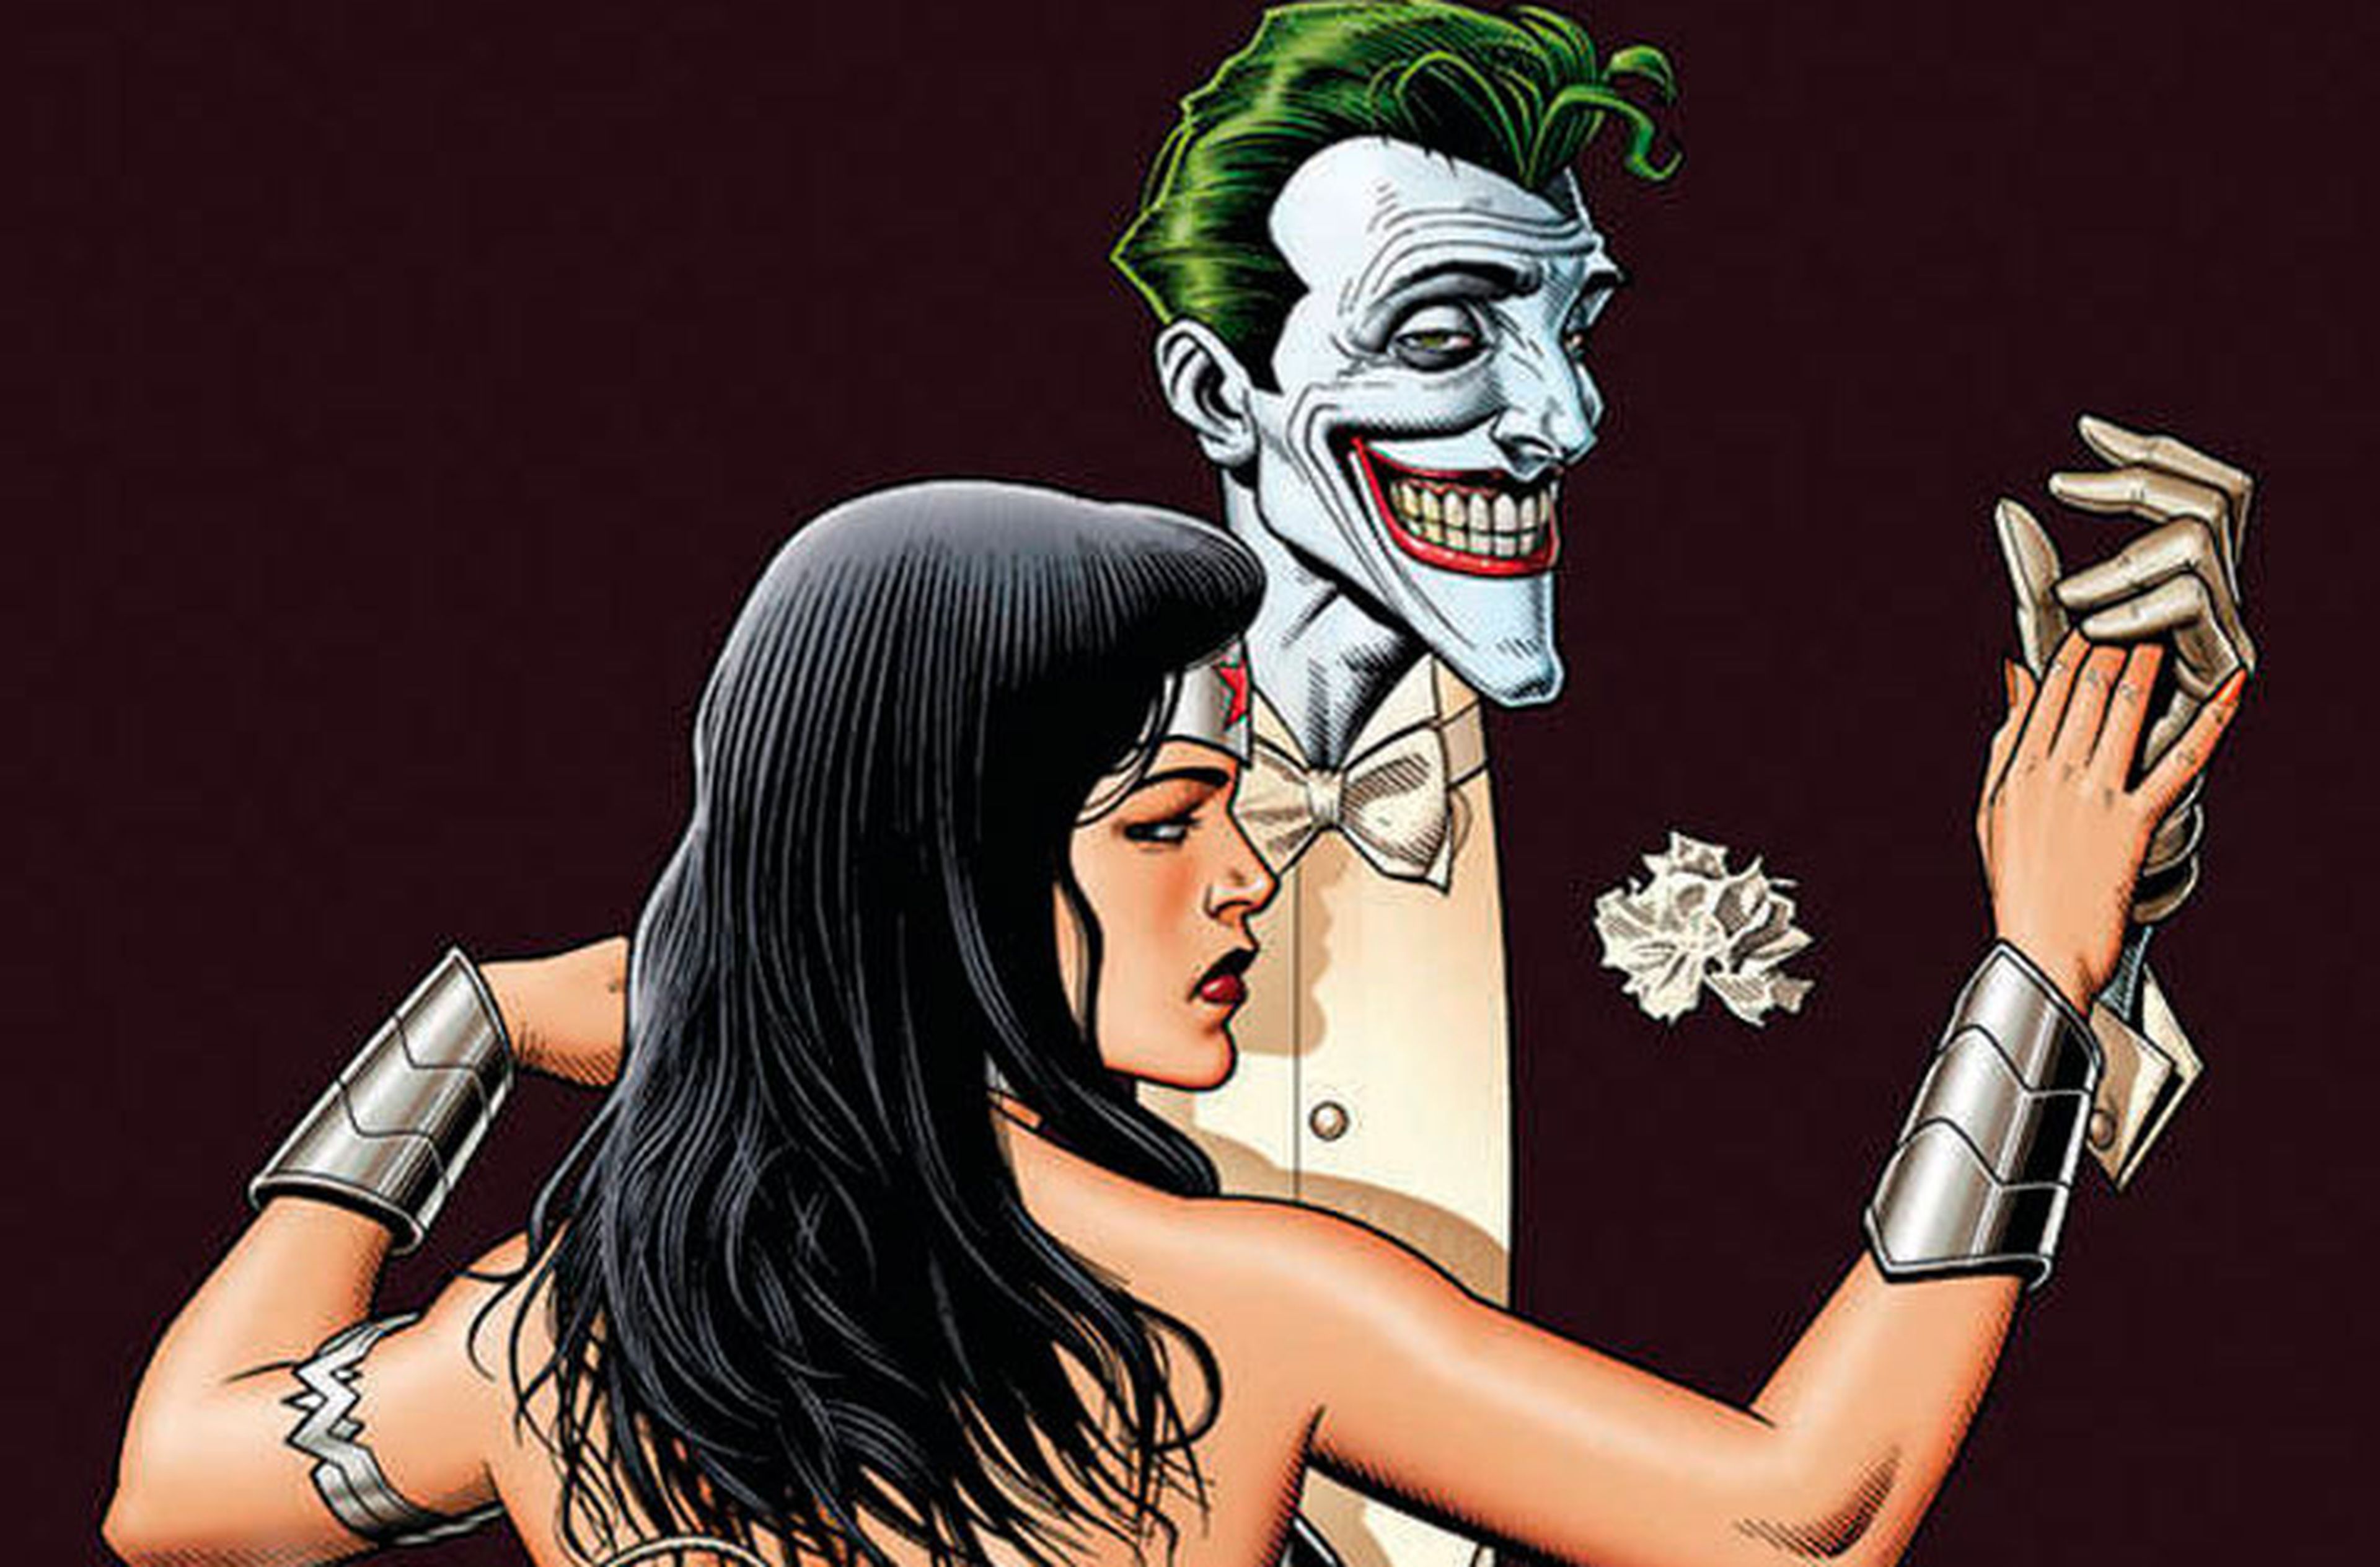 Wonder Woman vs Joker